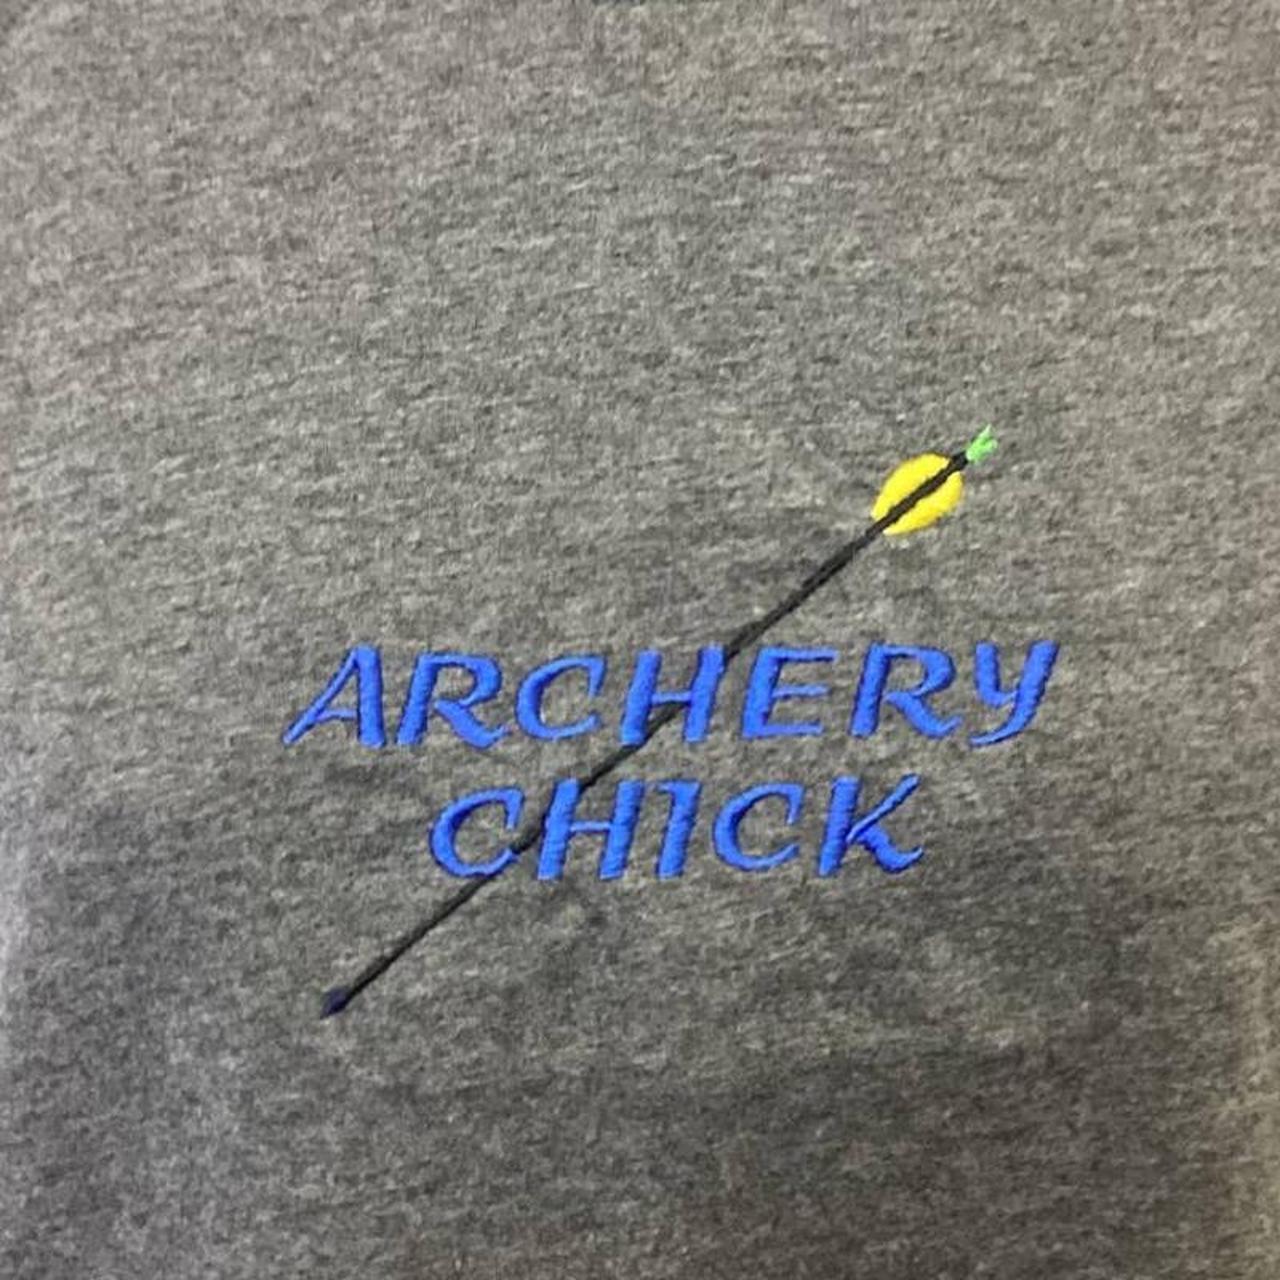 Danskin Now XXL Archery Chick Short Sleeve Cotton - Depop